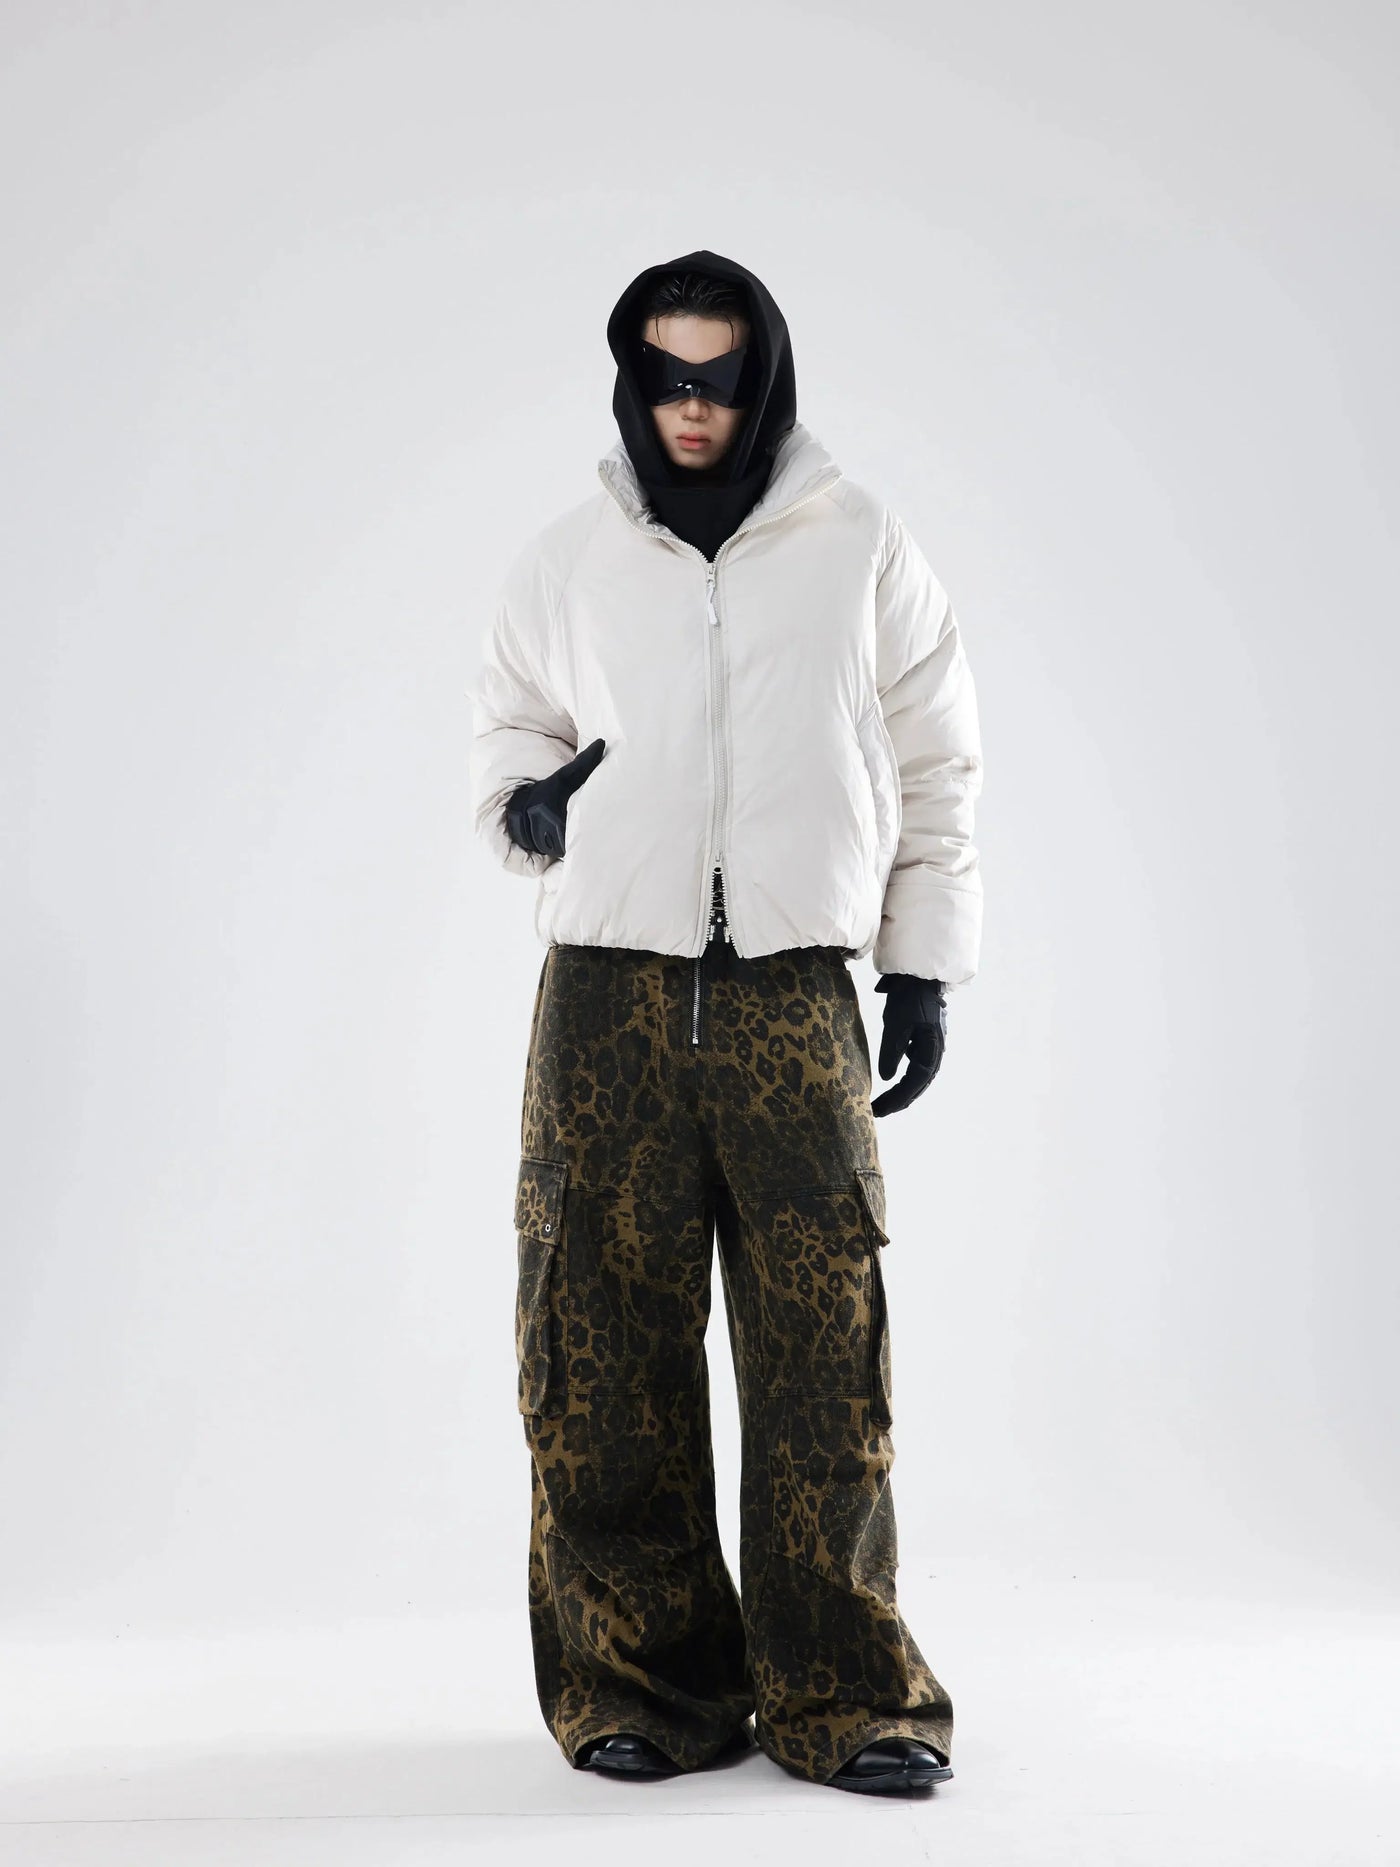 Dual Placket Stand Collar Puffer Jacket Korean Street Fashion Jacket By Dark Fog Shop Online at OH Vault